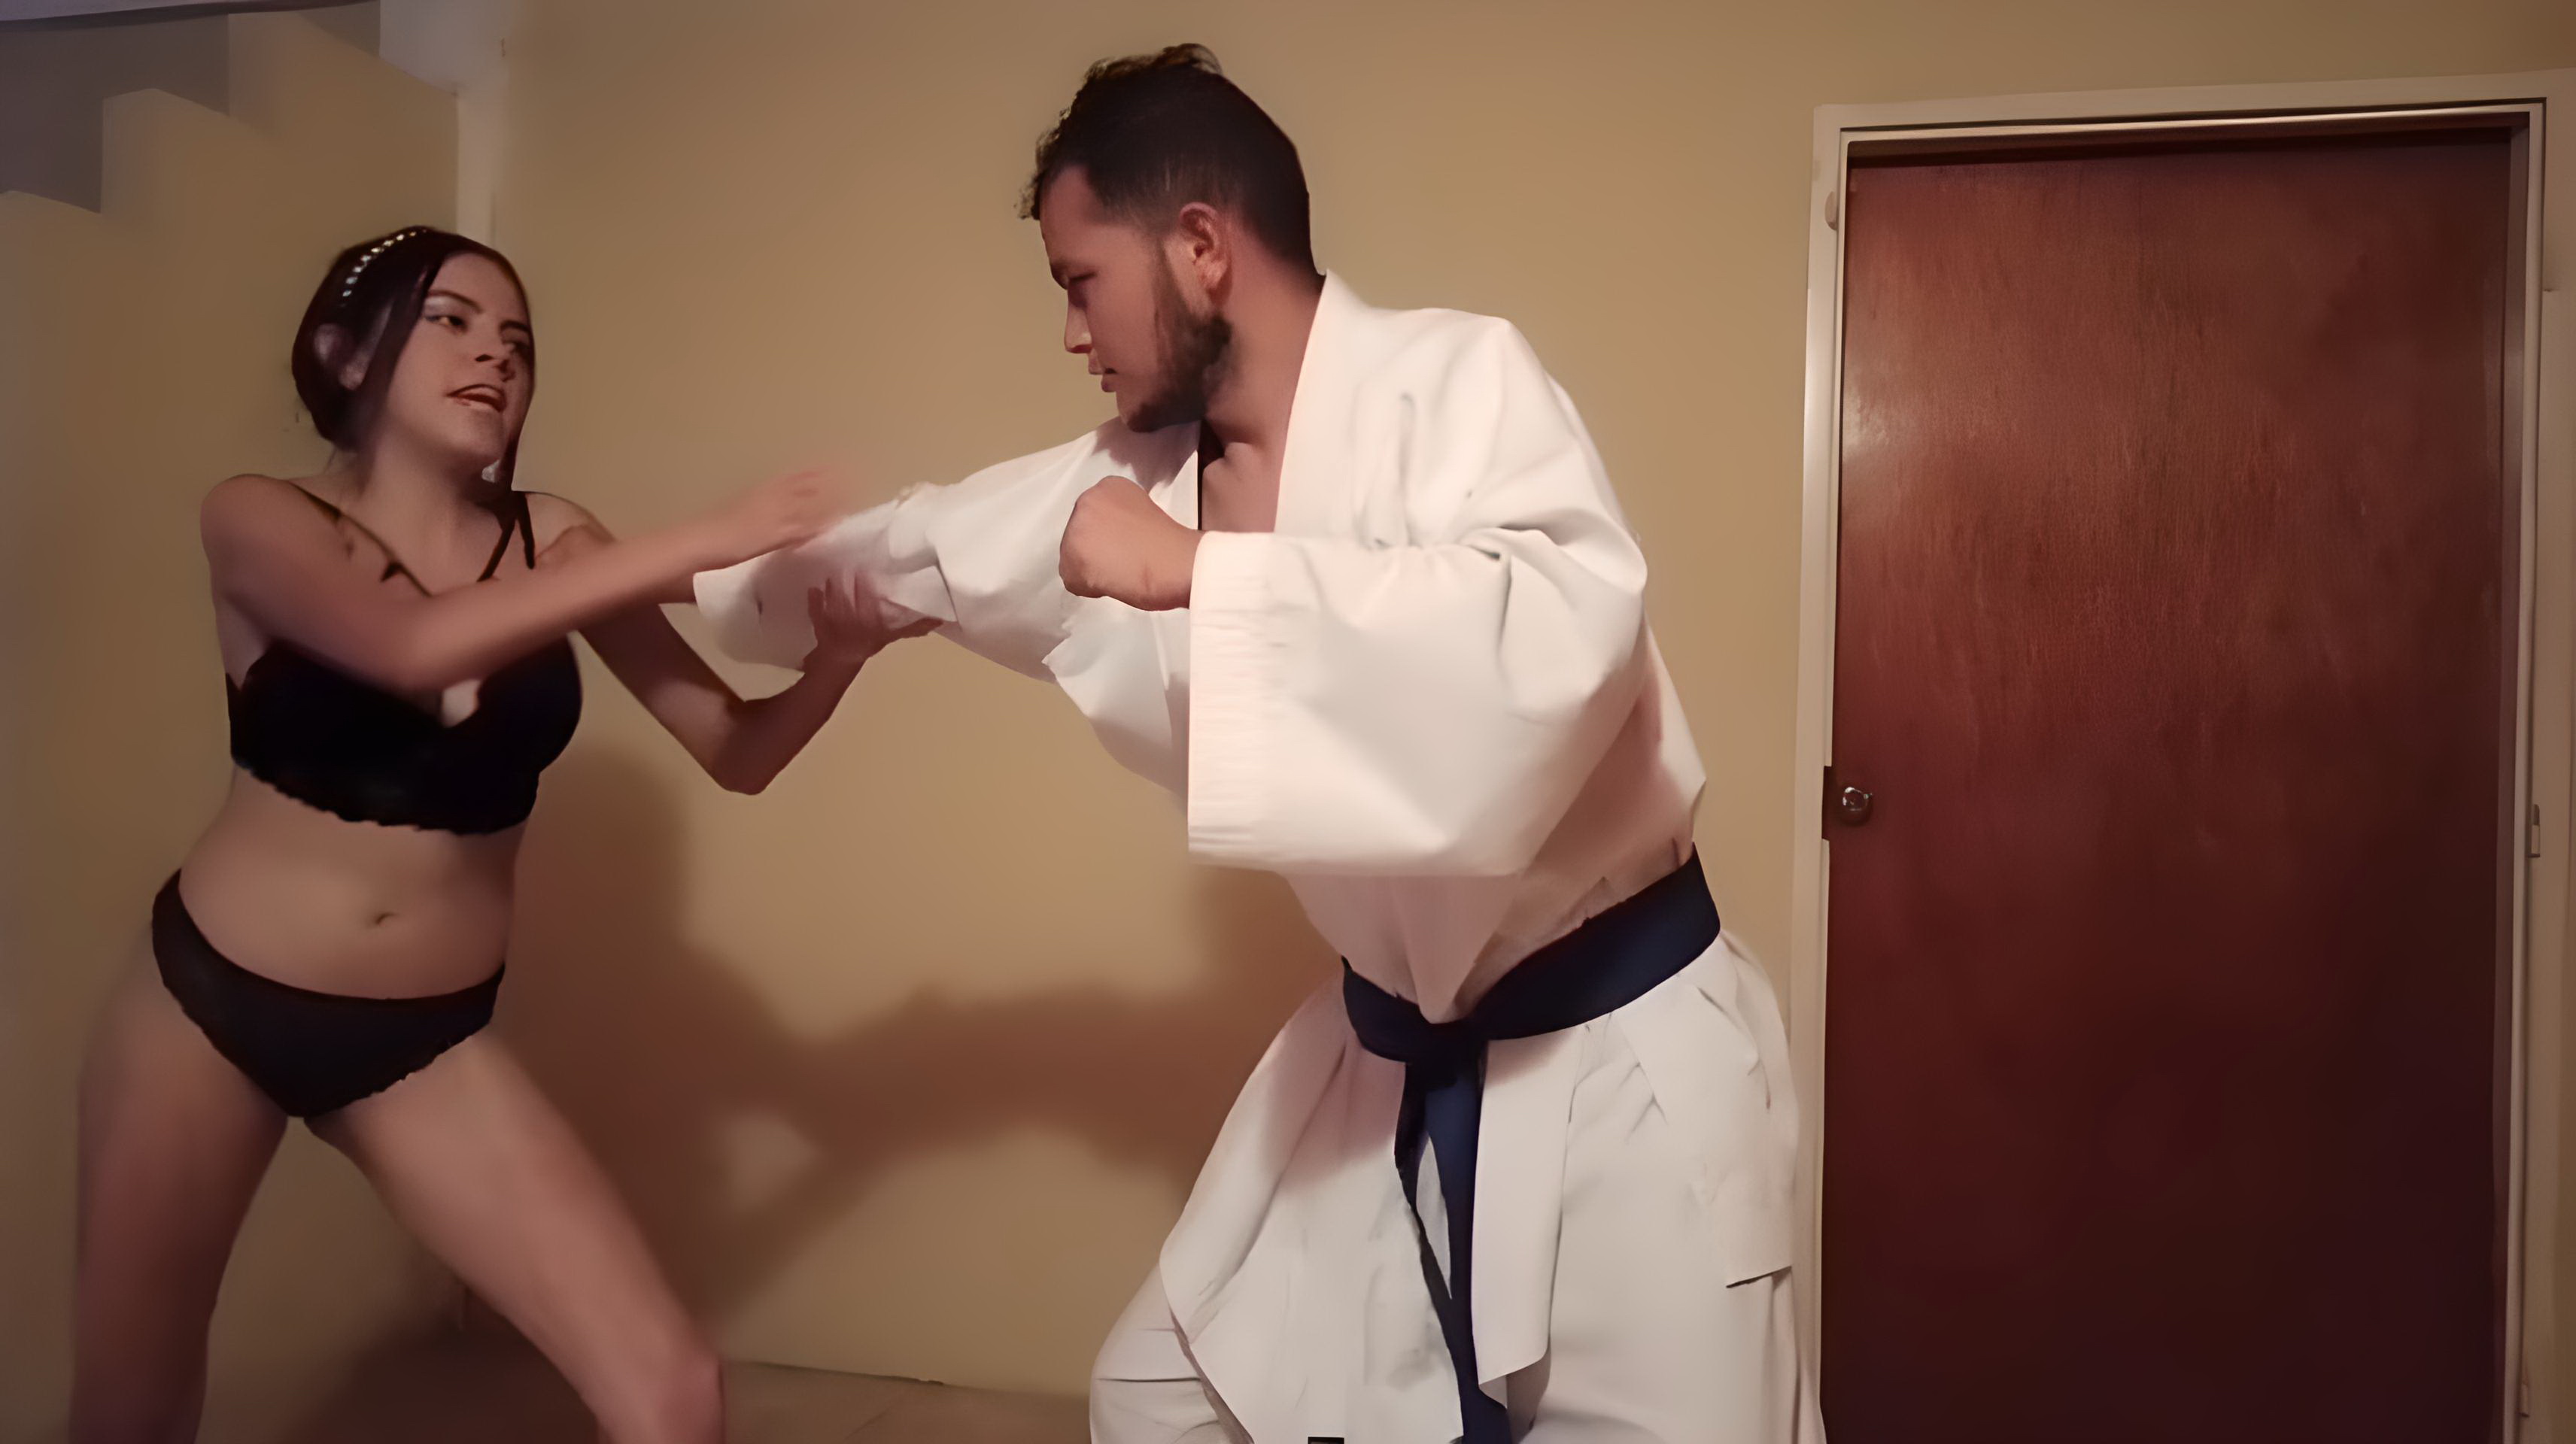 Kloe, the karate babe, destroys karate mate